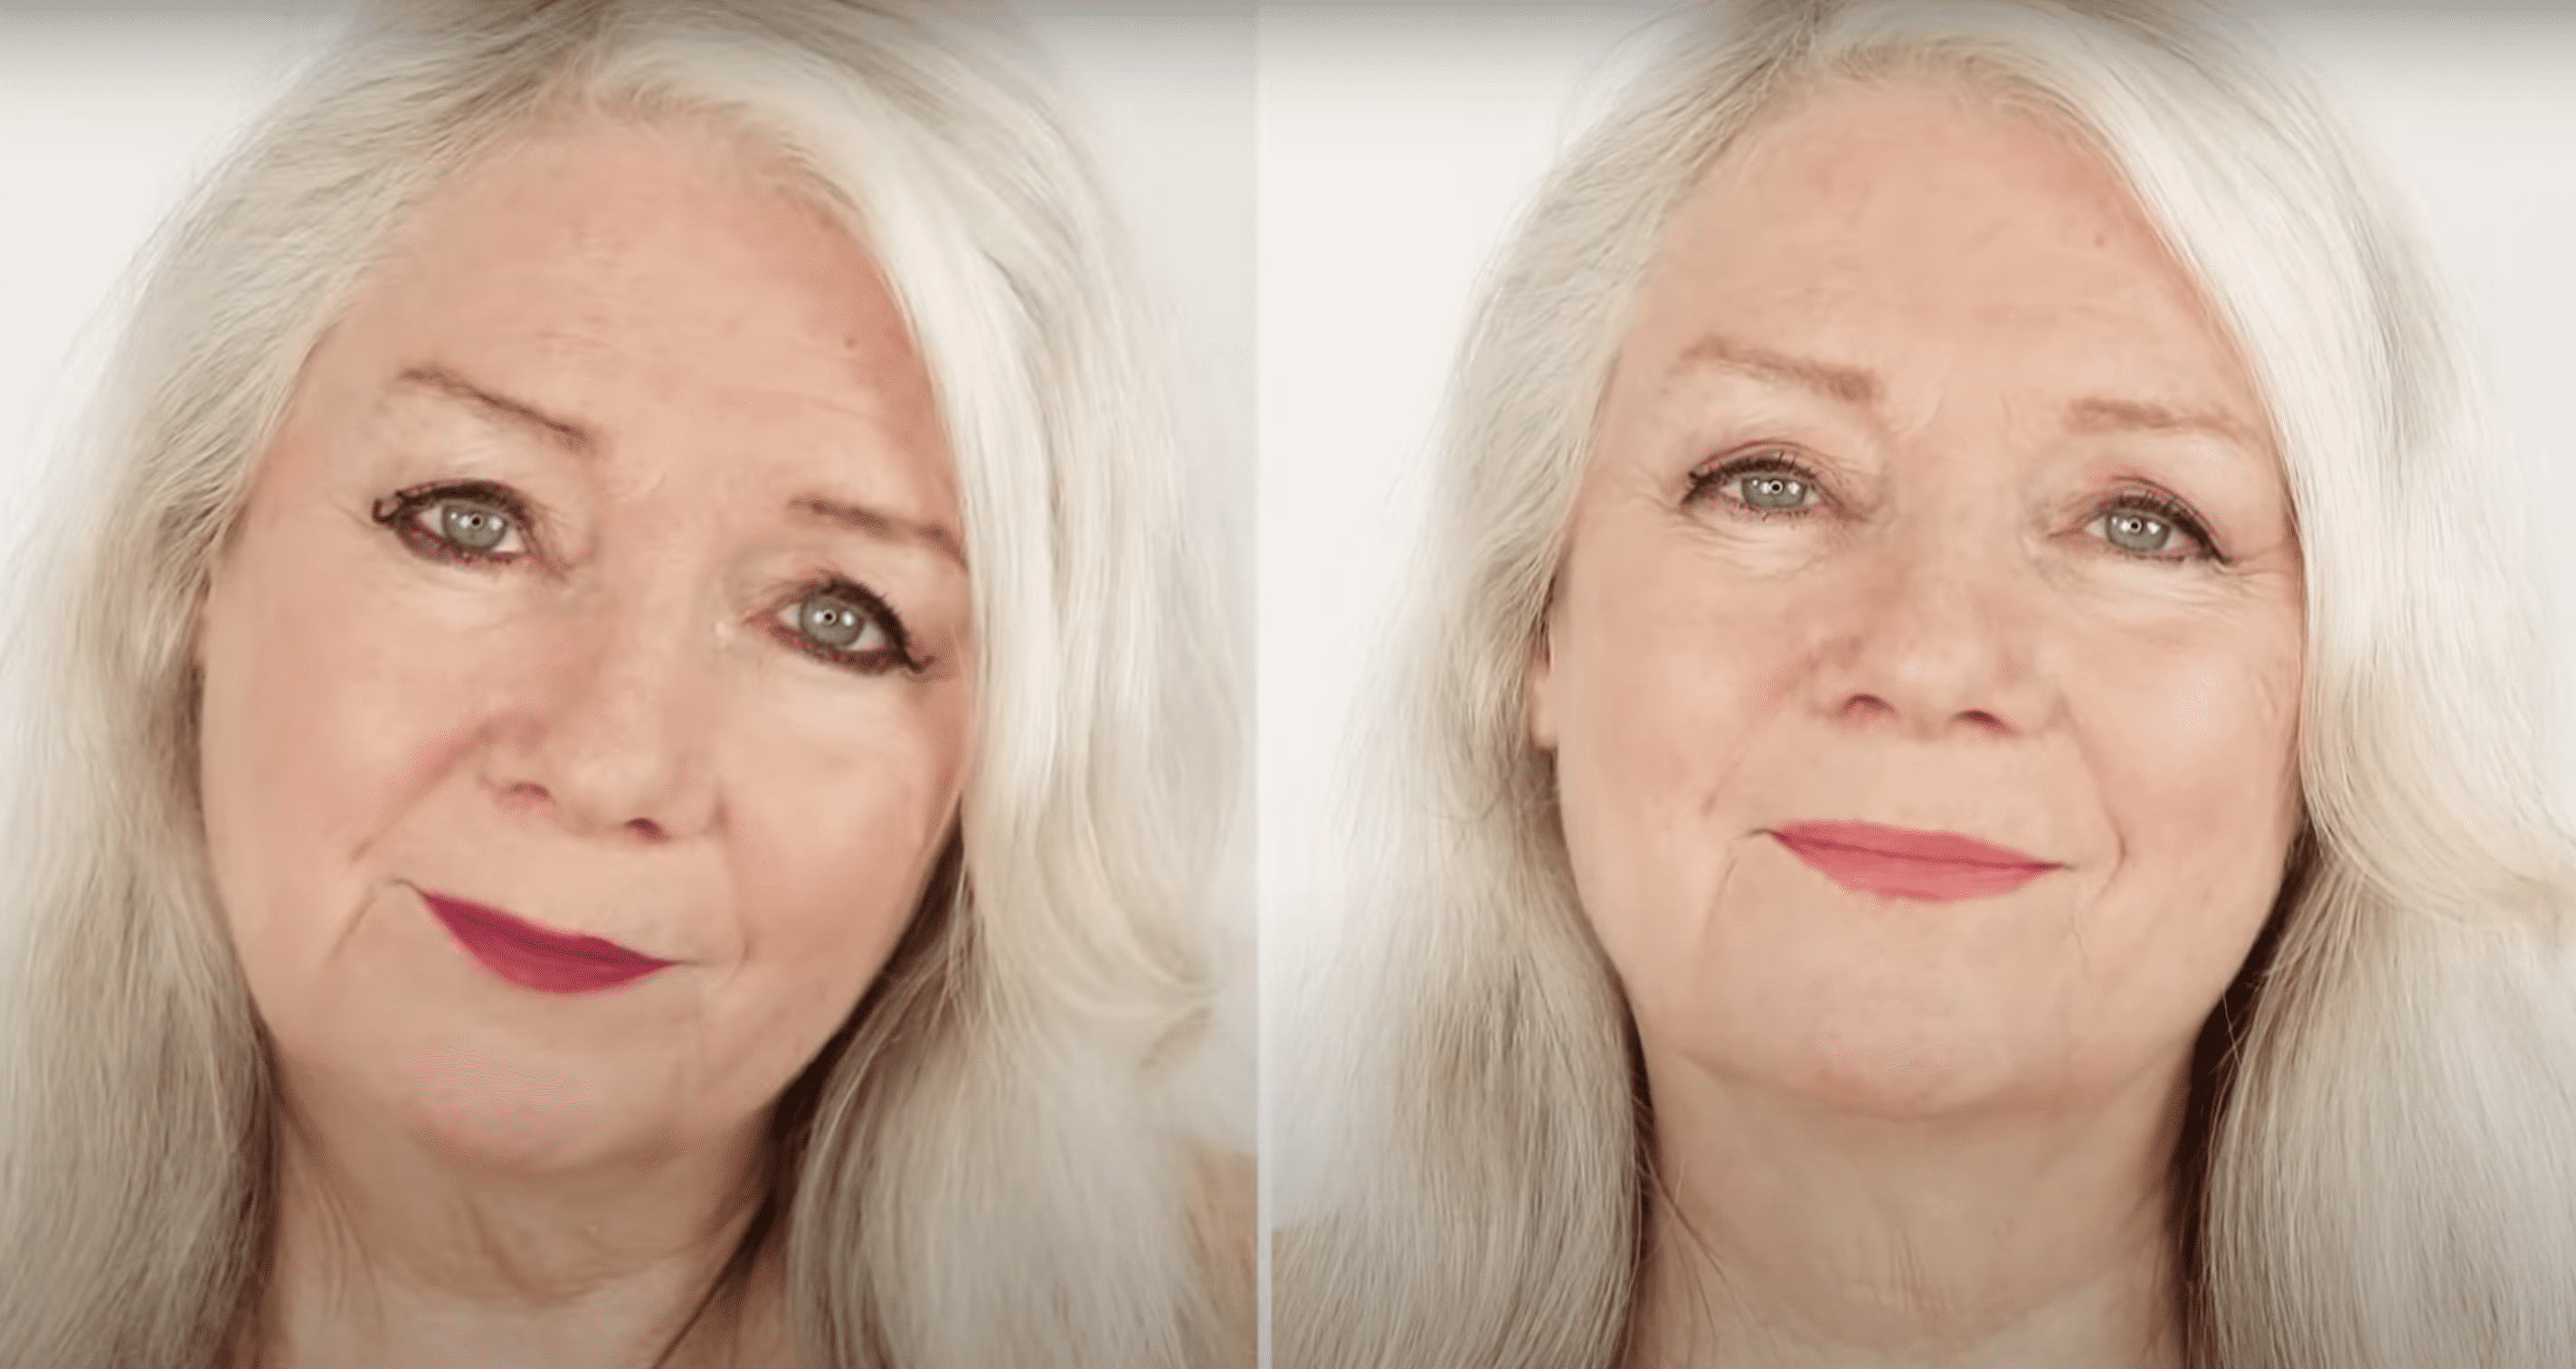 Heather trägt Make-up in dunklen und helleren Tönen | Quelle: YouTube.com/Awesome over 50